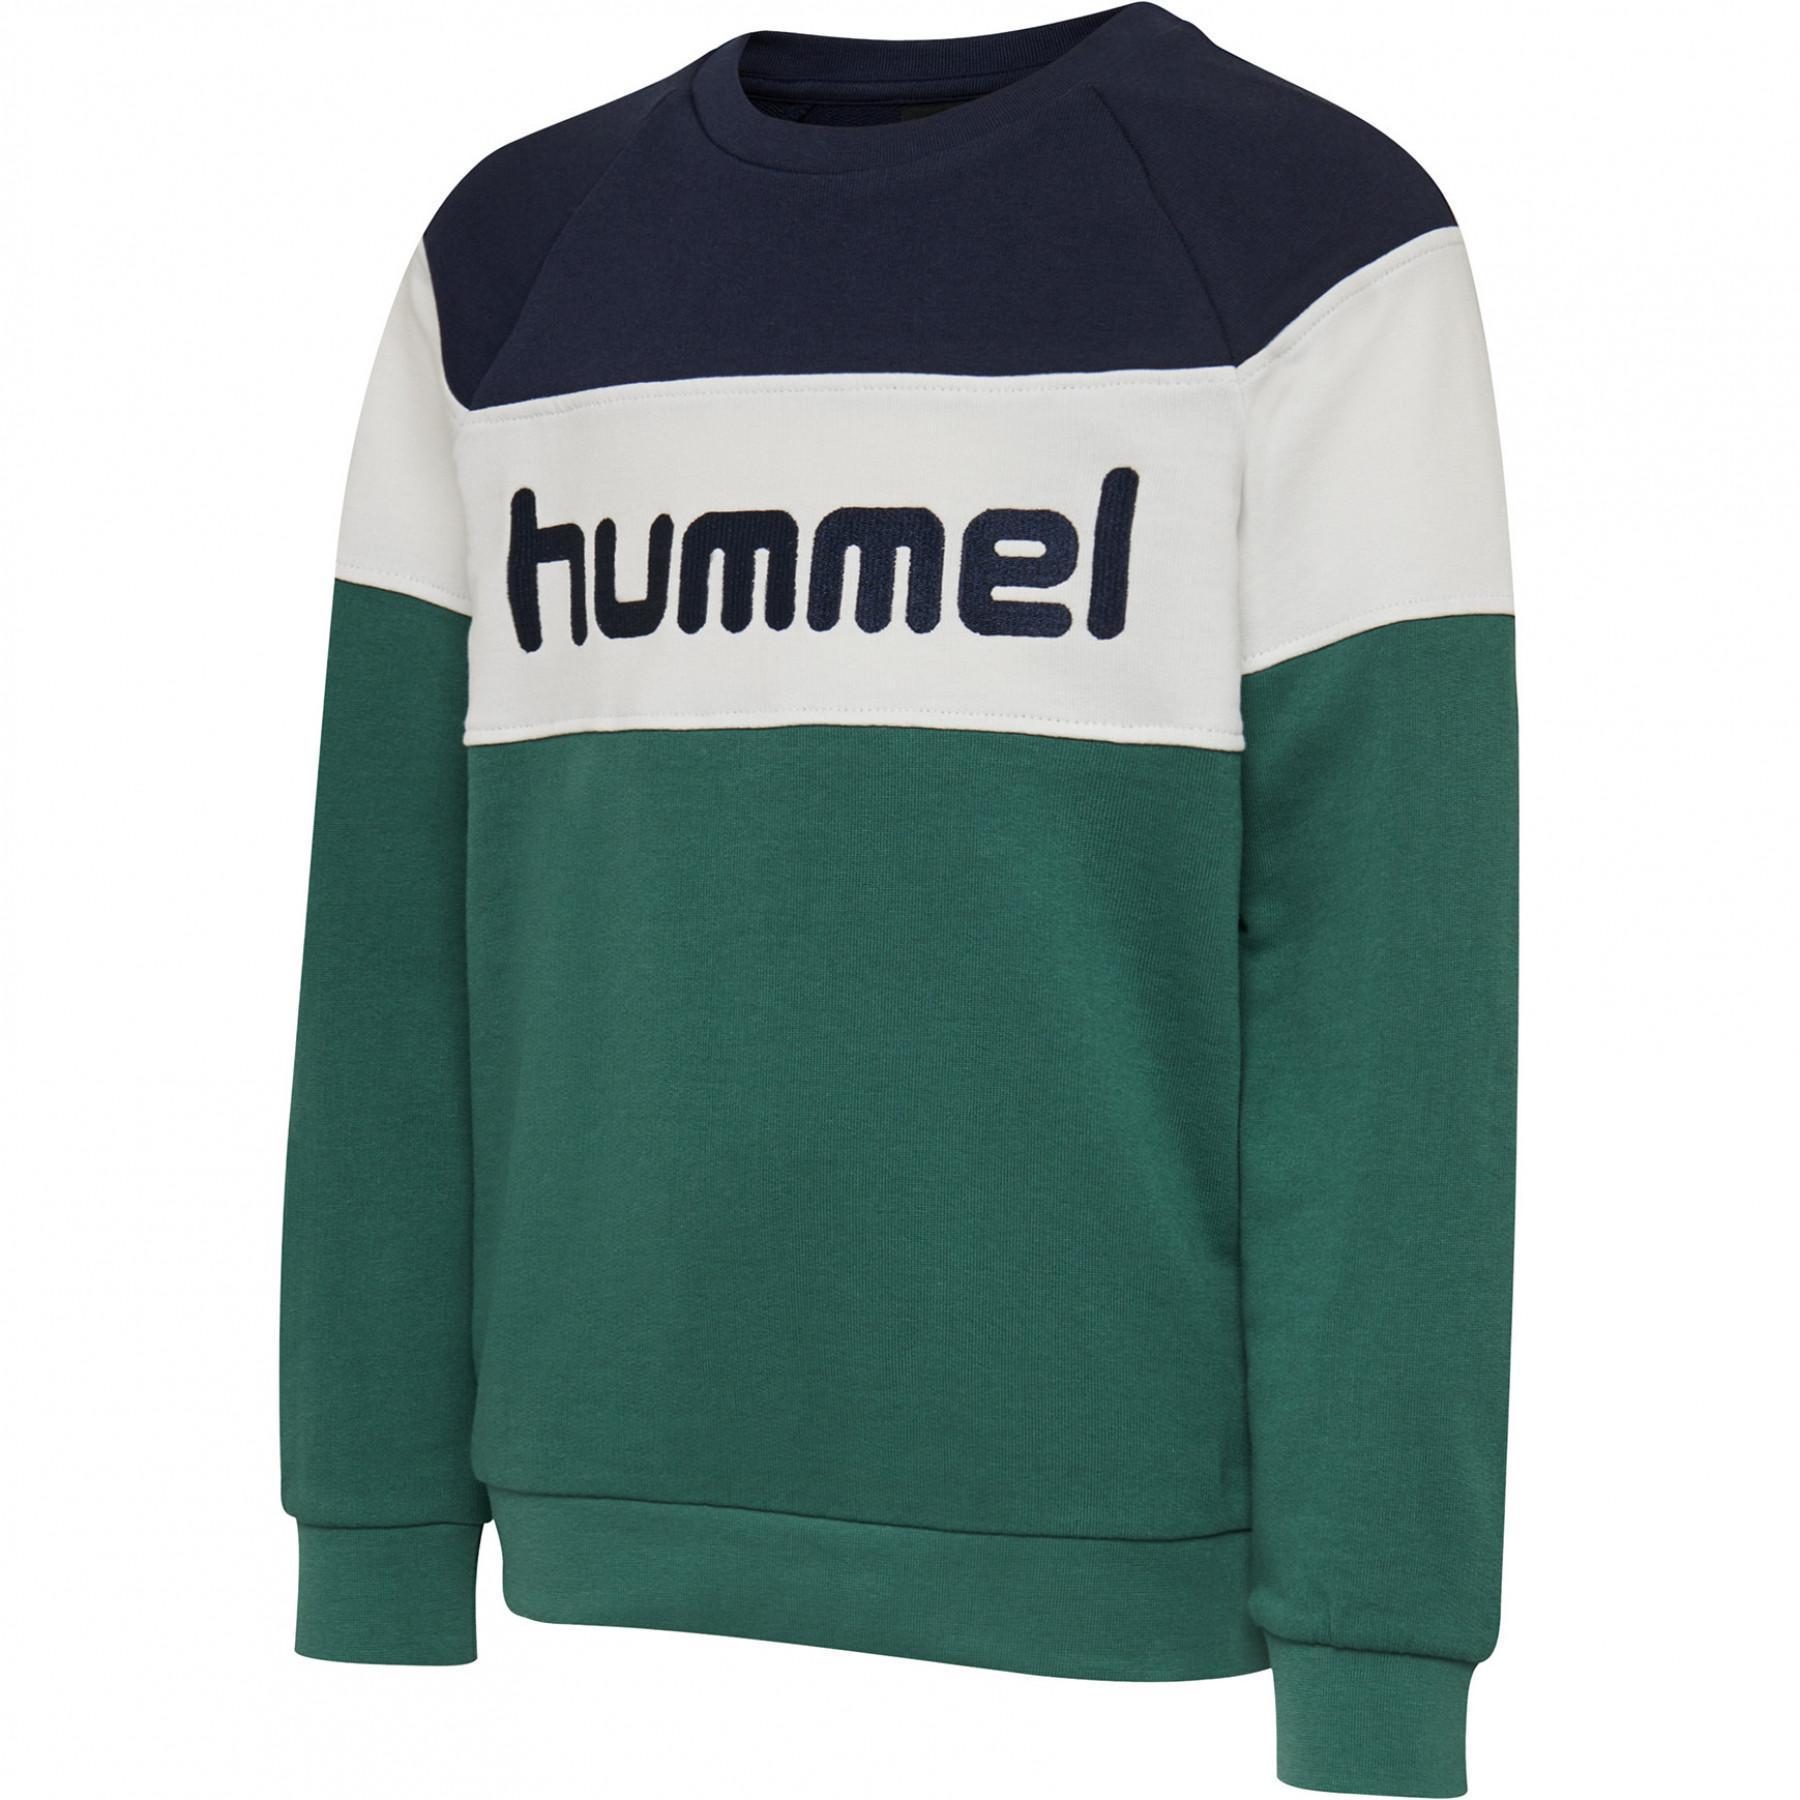 Sweatshirt child Hummel hmlclaes